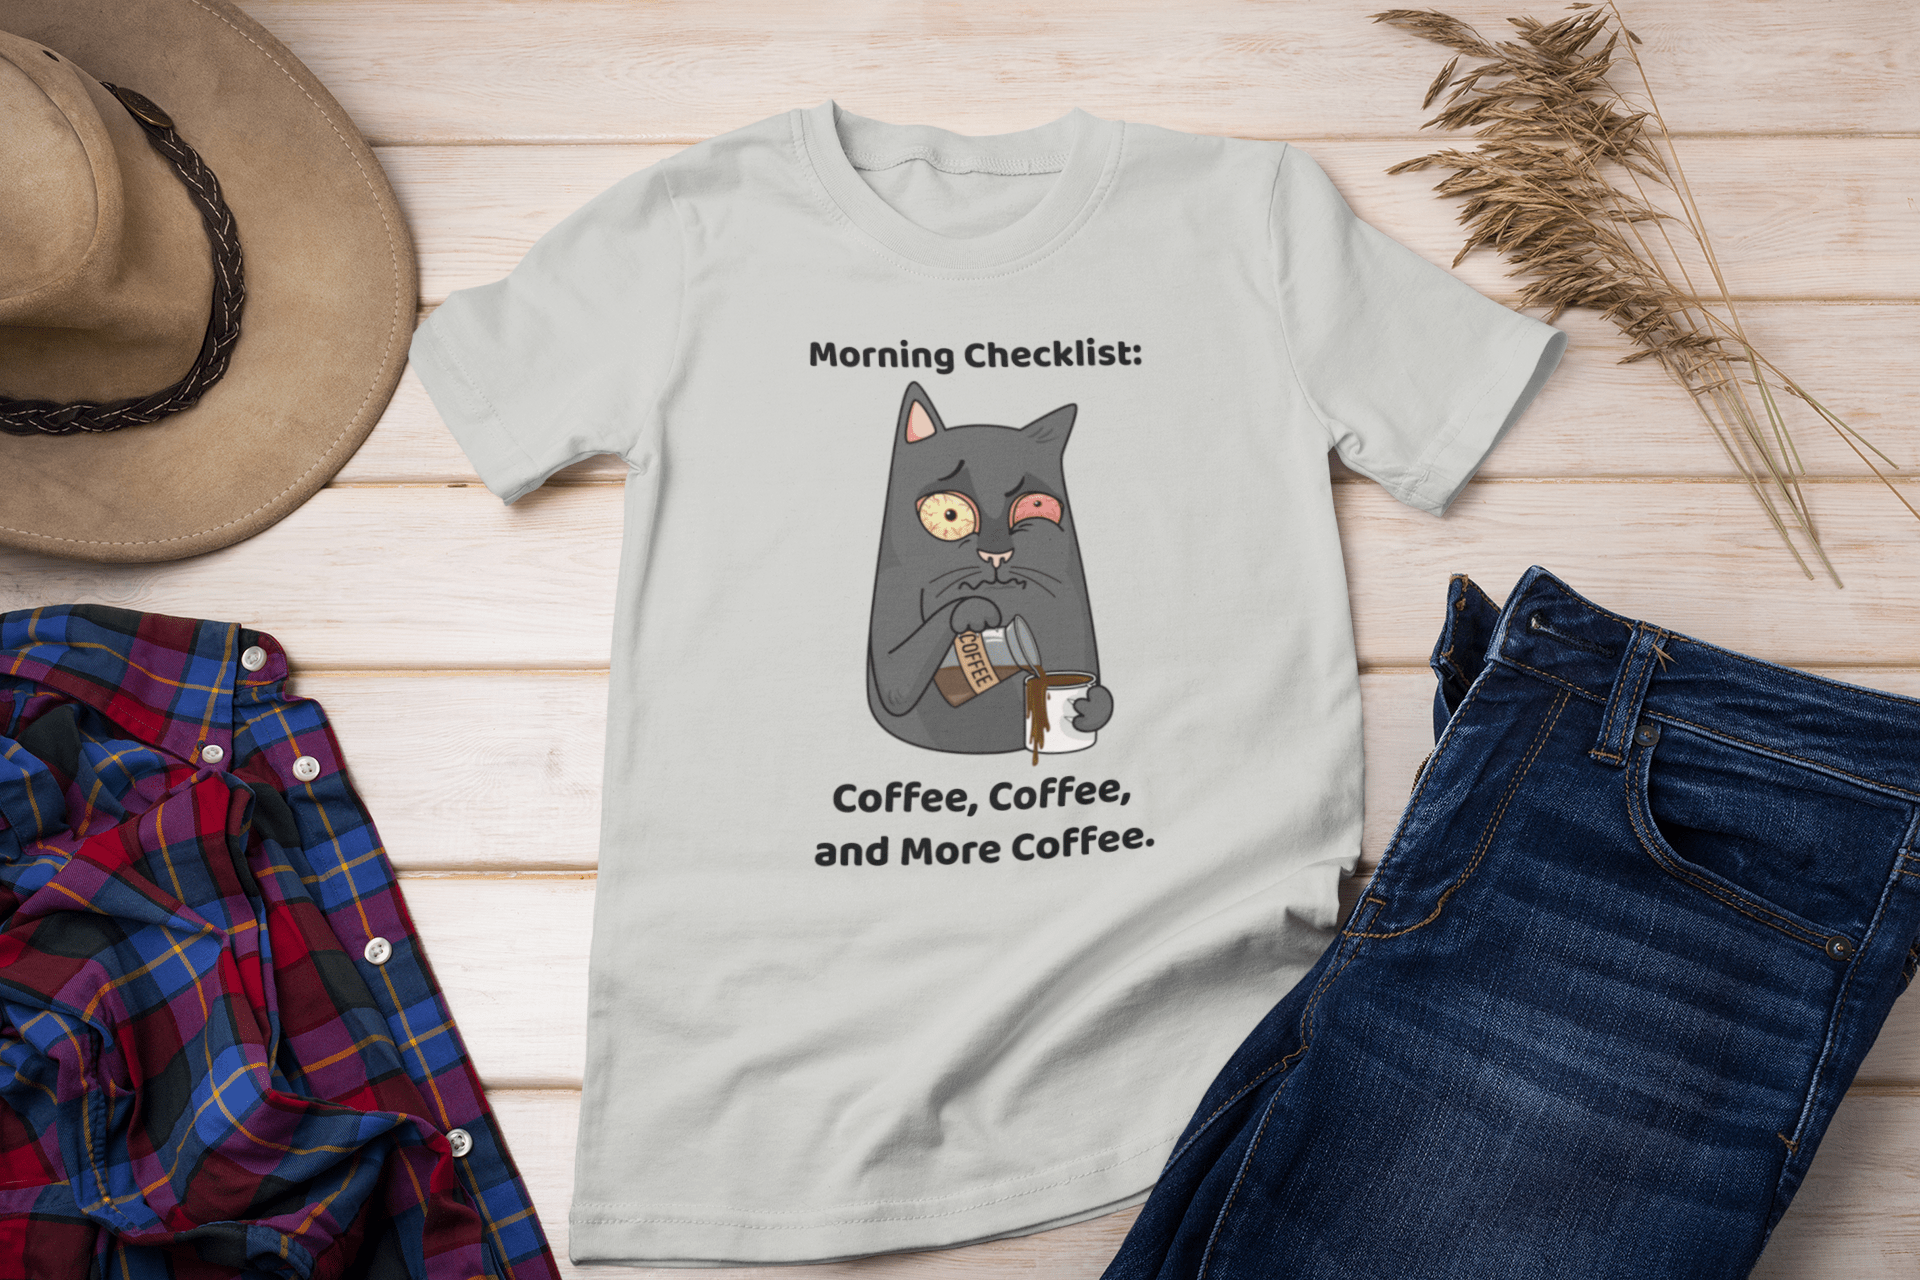 Morning Checklist: Coffee, Coffee, and More Coffee. - InkArt Fashions